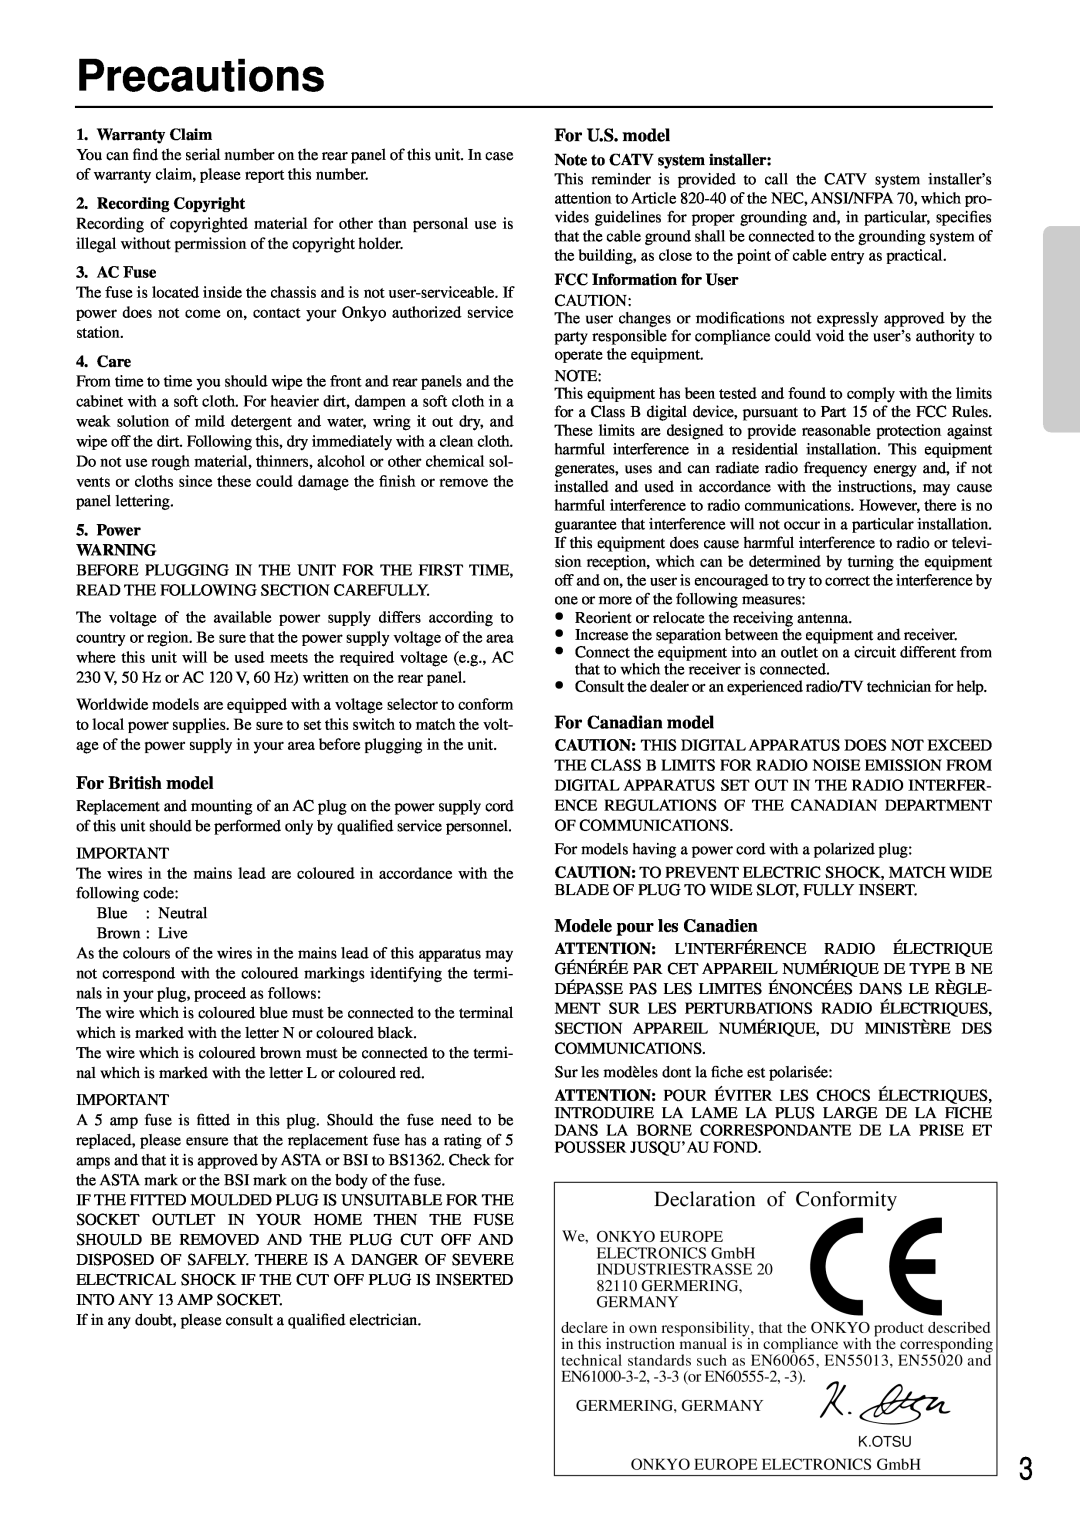 Onkyo TX-DS474 appendix Precautions, For British model, For U.S. model, For Canadian model, Modele pour les Canadien 